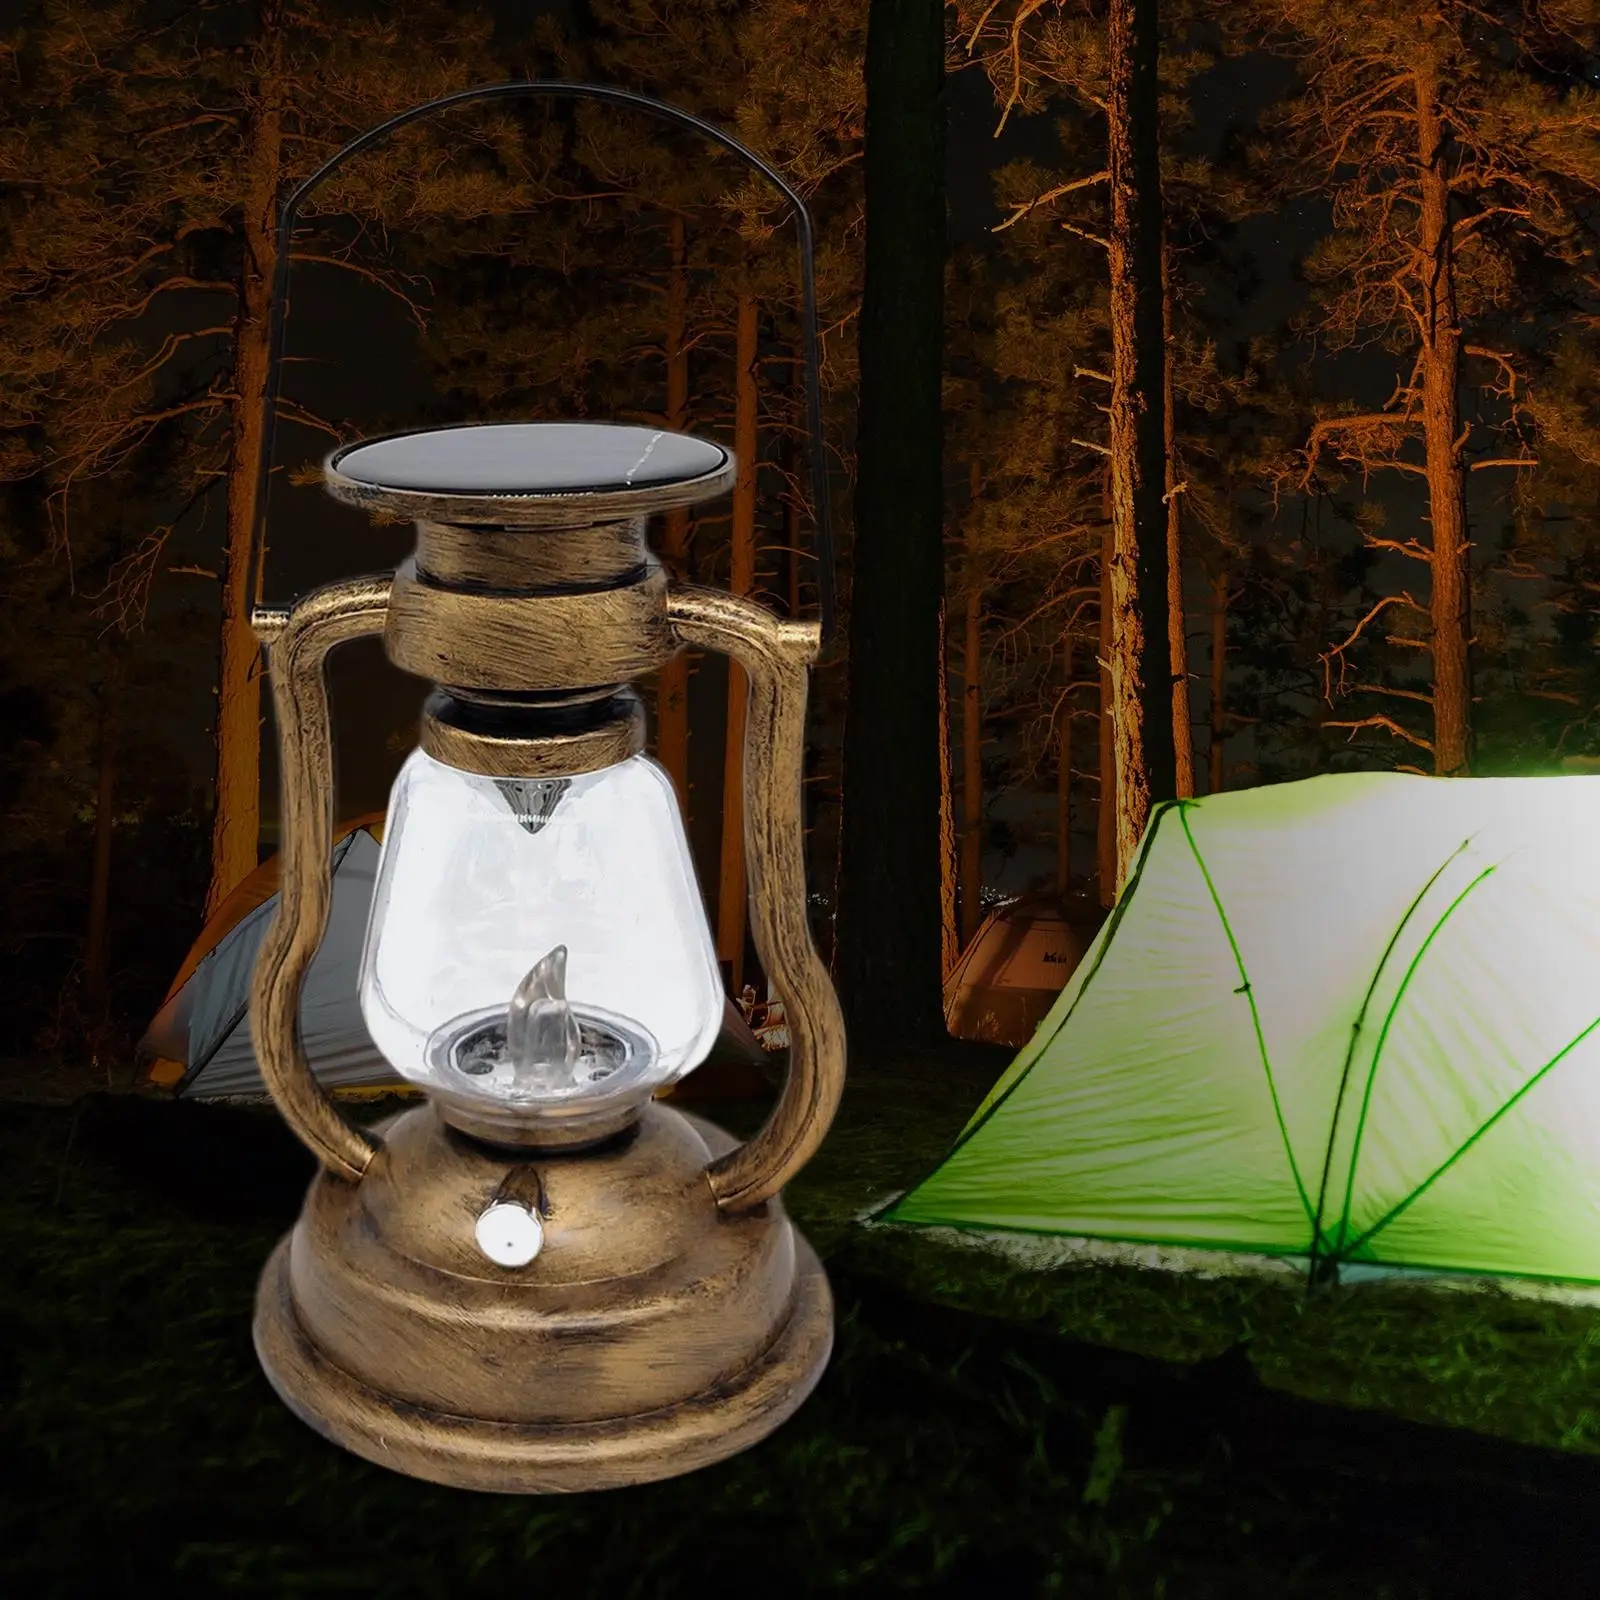 LED Camping Lanterns Solar Power Outage Fishing Landscape Lighting Flashlight Emergency Camping Lights for Fence Garden Decor